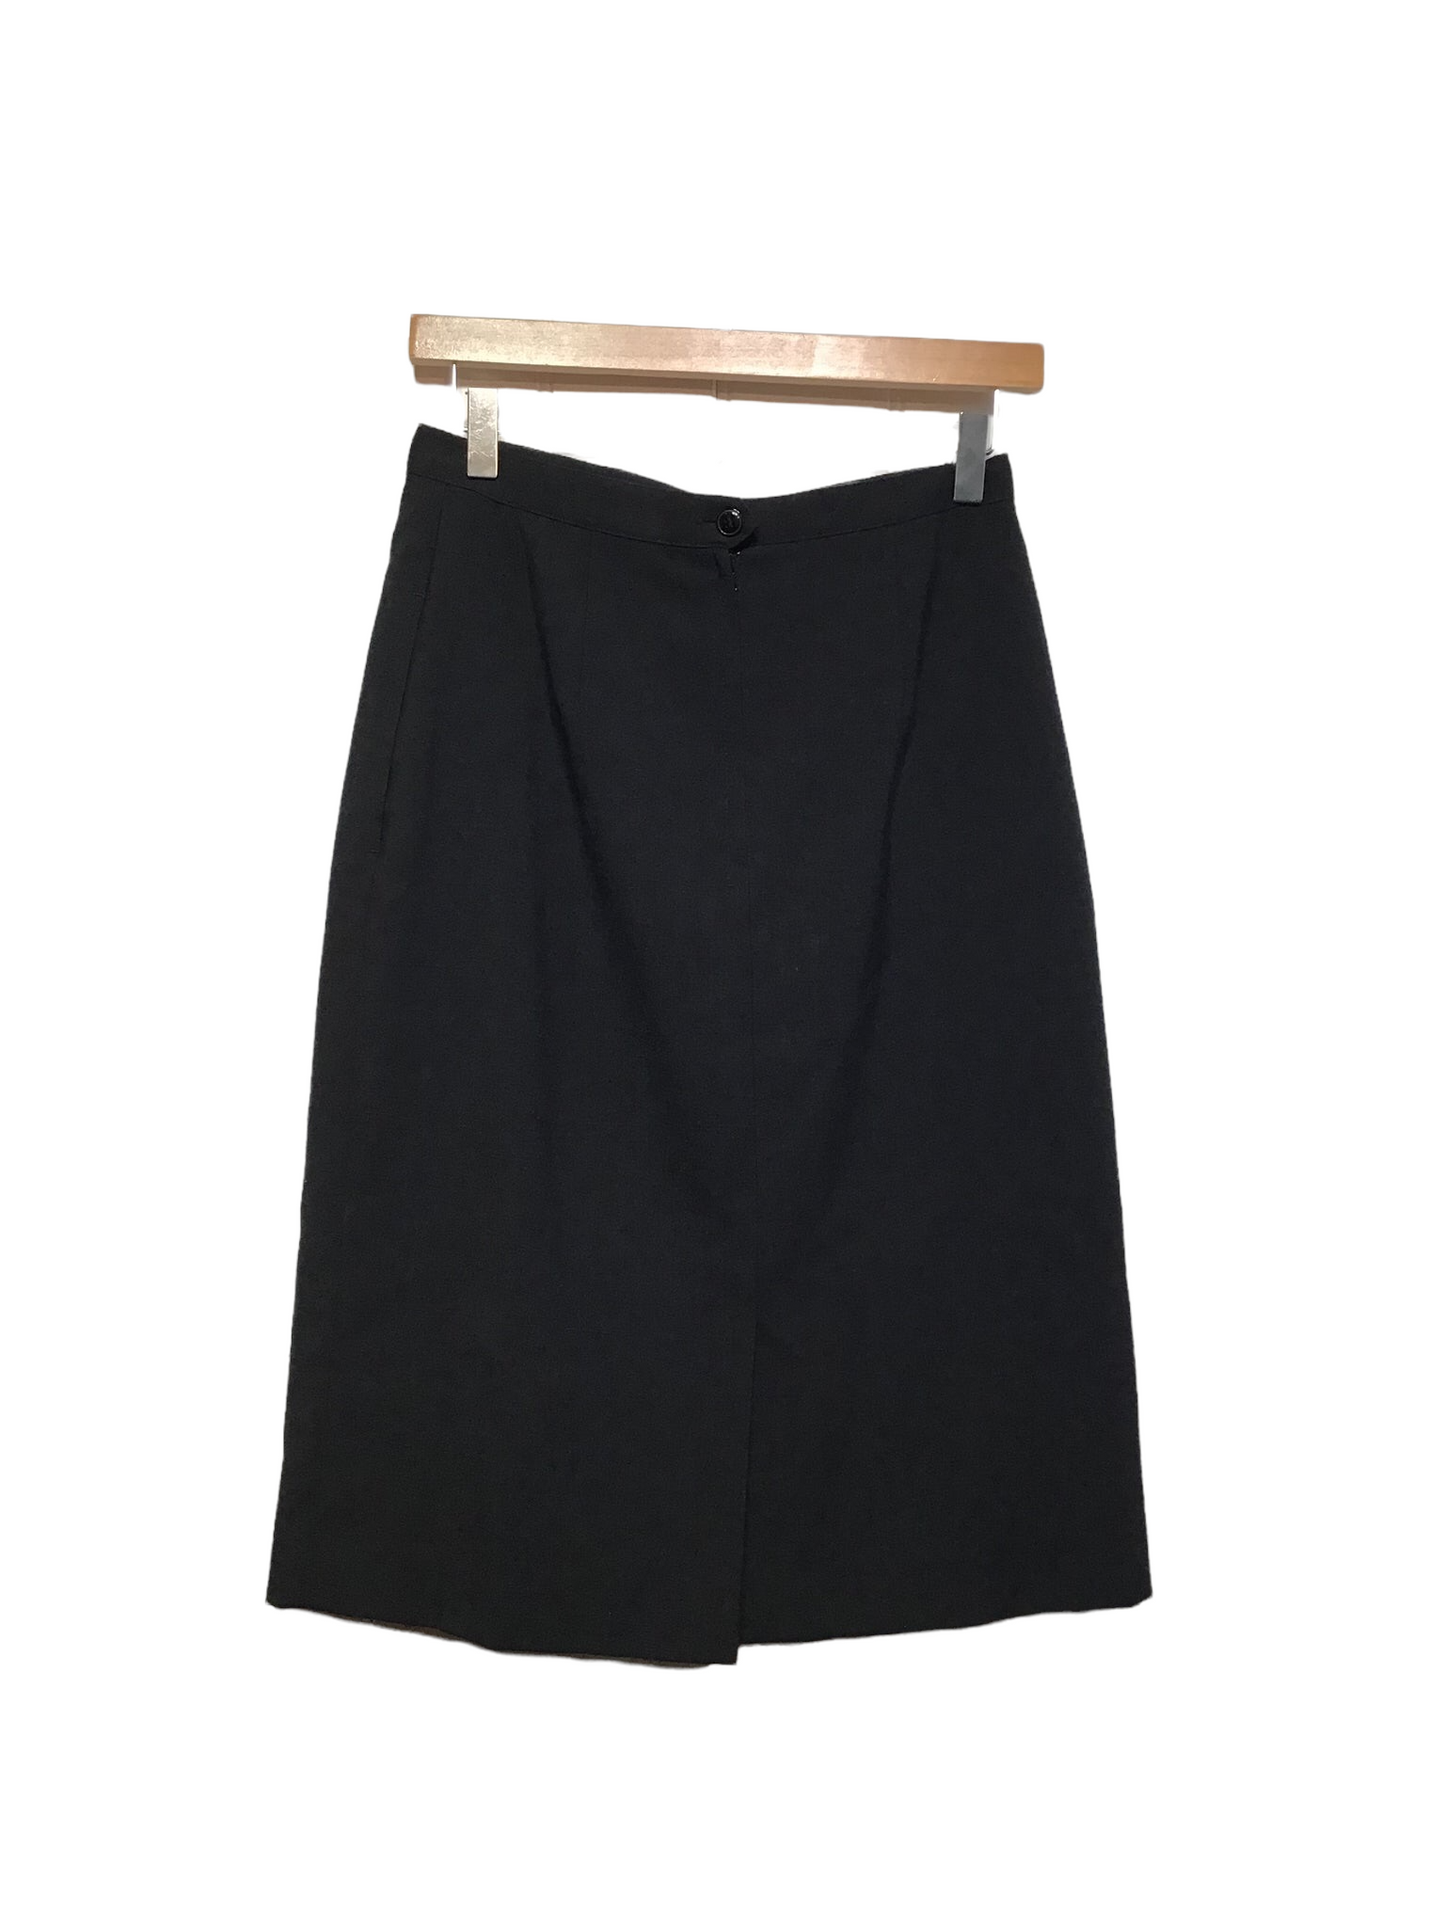 Black Dart Midi Skirt (Size M)